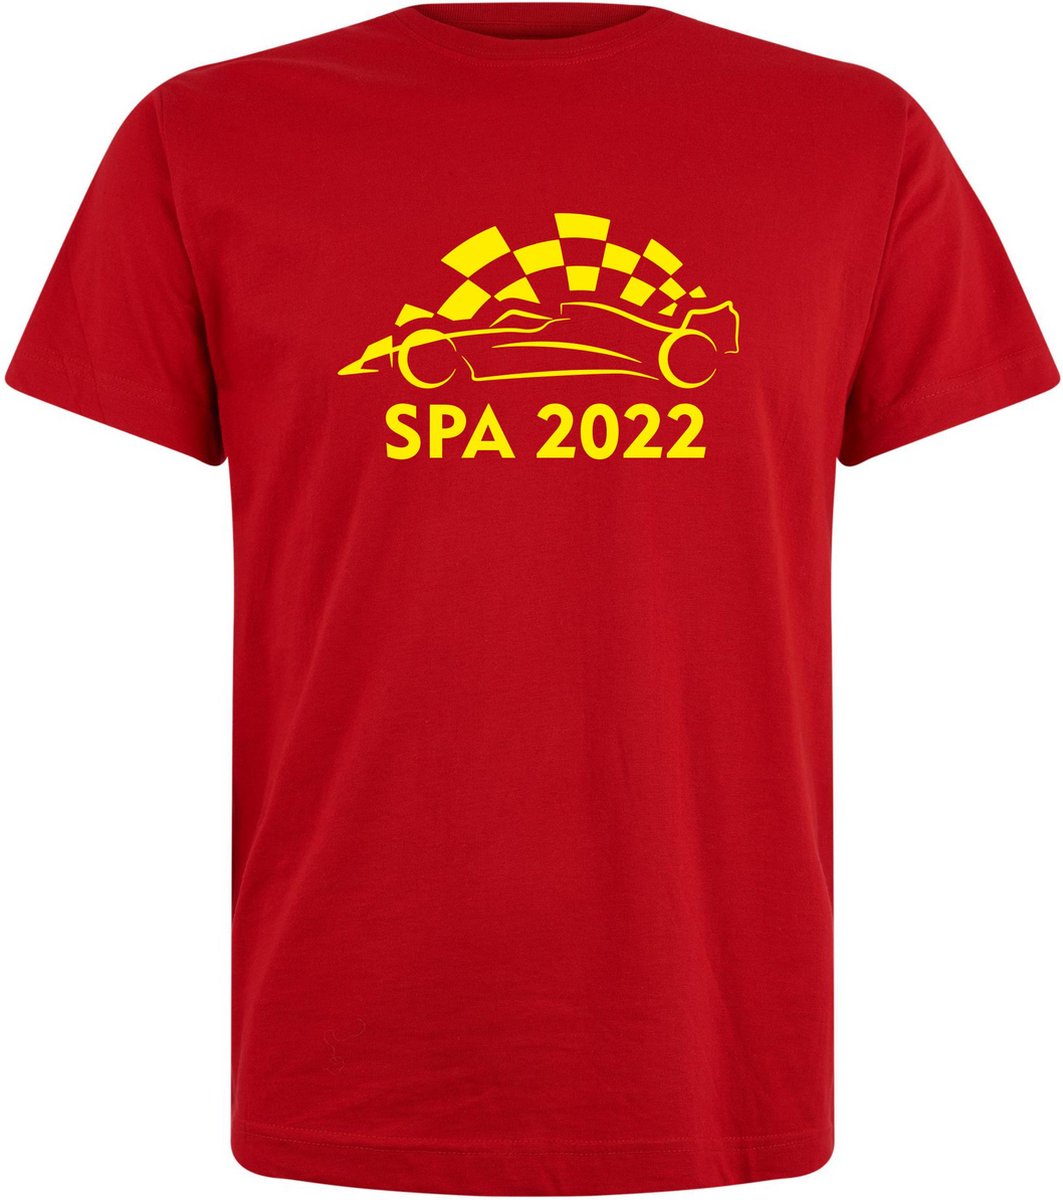 T-shirt kinderen Spa 2022 met raceauto | Max Verstappen / Red Bull Racing / Formule 1 fan | Grand Prix Circuit Spa-Francorchamps | kleding shirt | Rood | maat 128